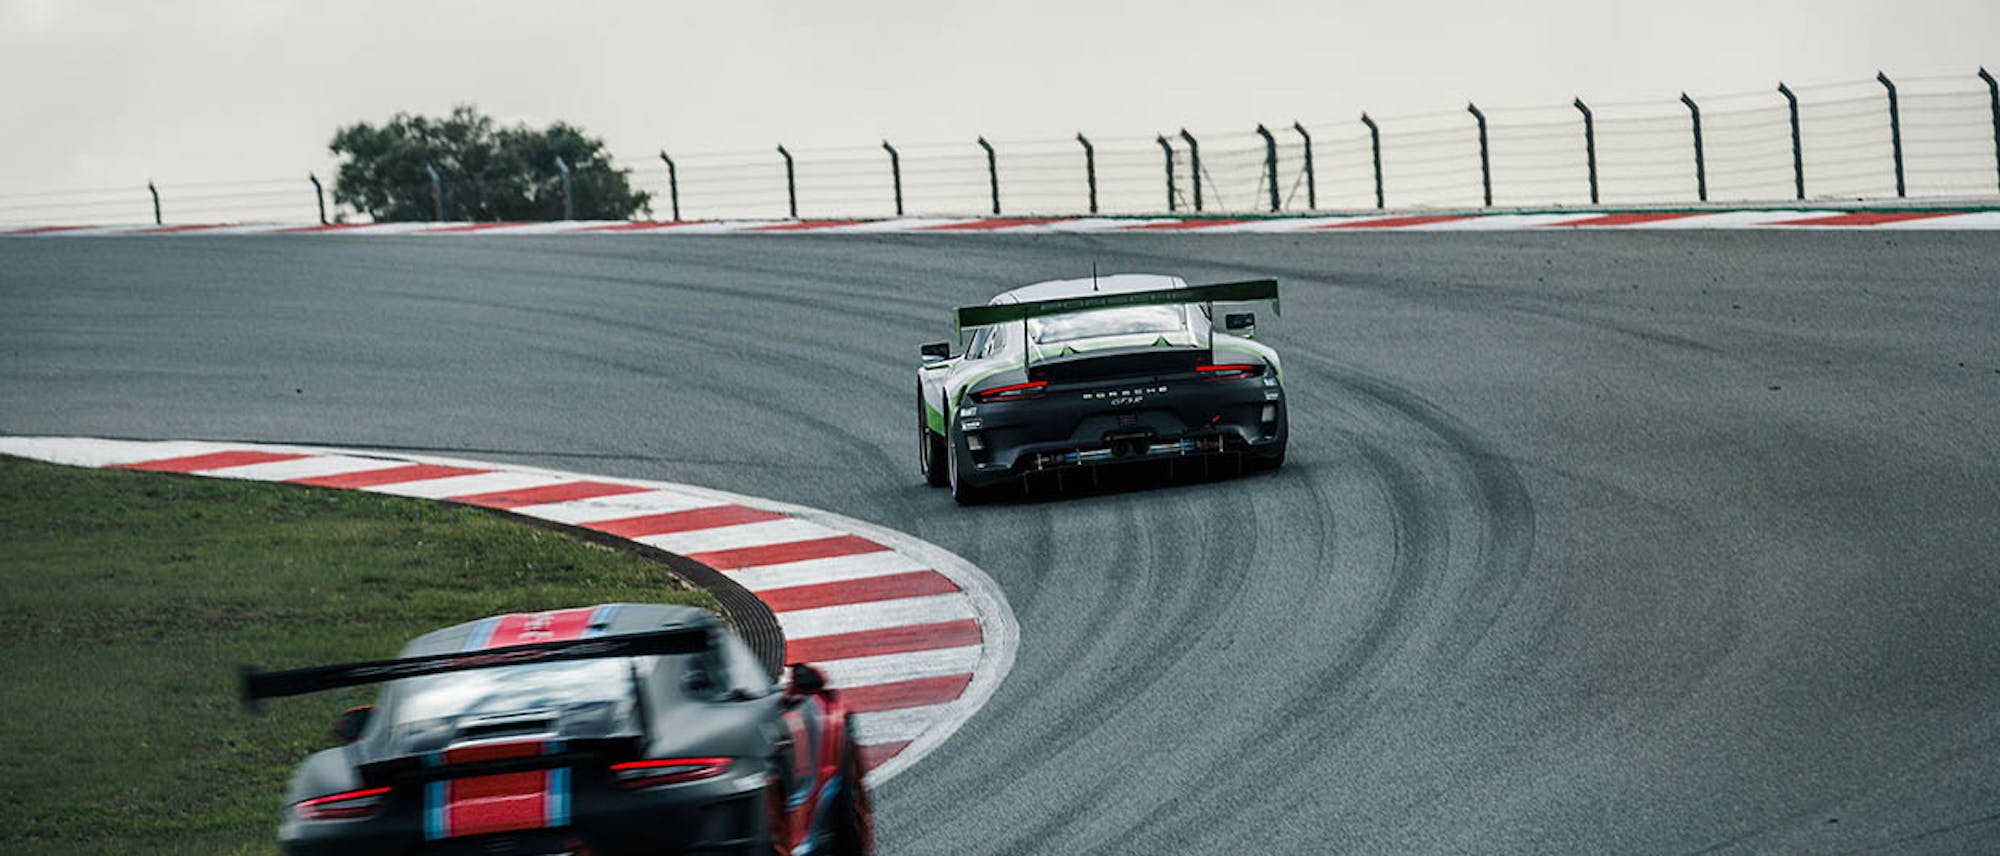 Two Porsche racecars on race track